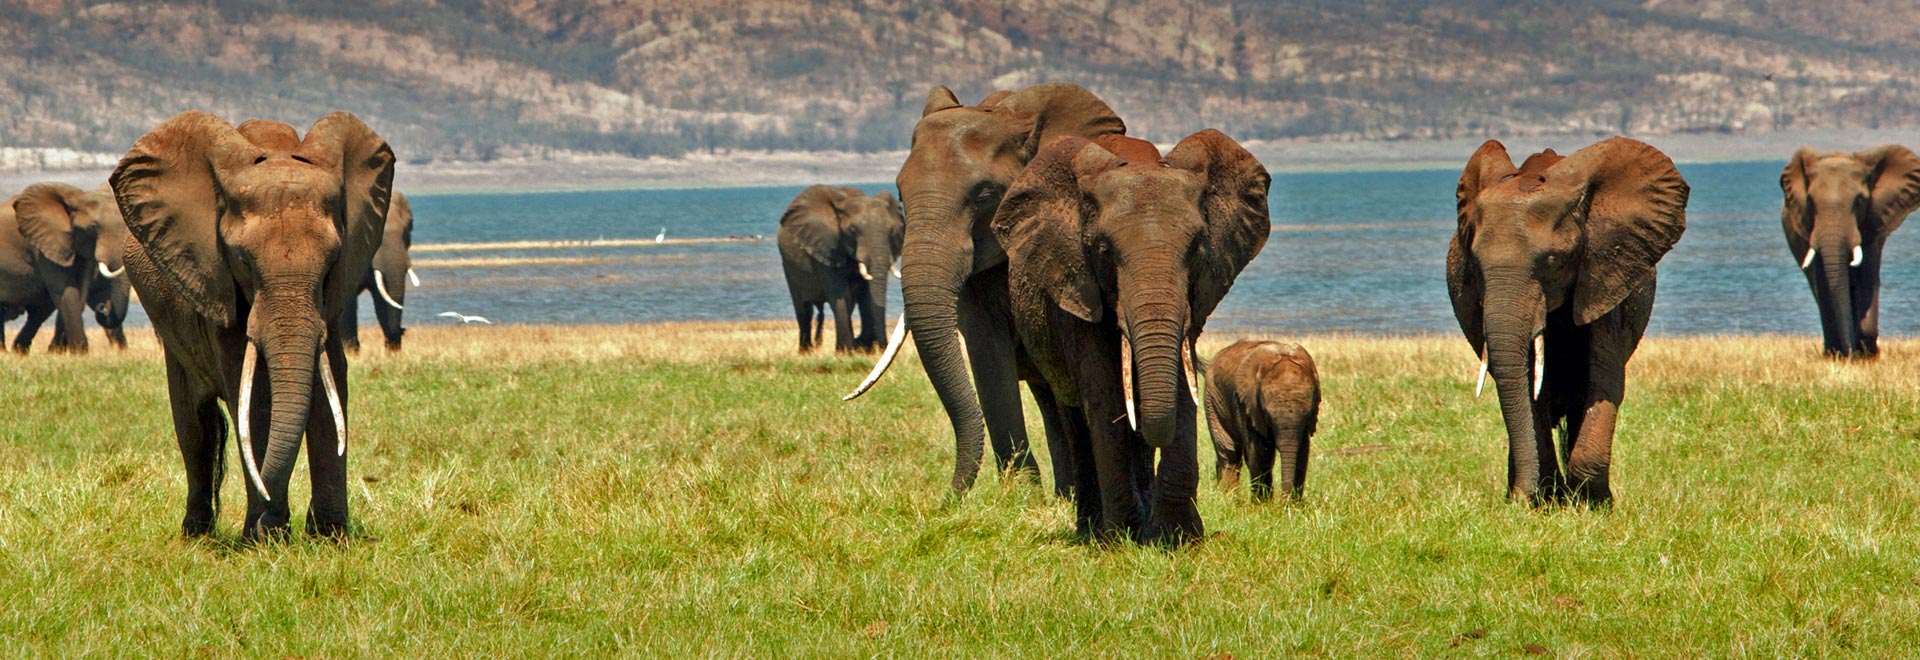 Africa TM ZImbabwe Wildlife Victoria Falls Elephants MH